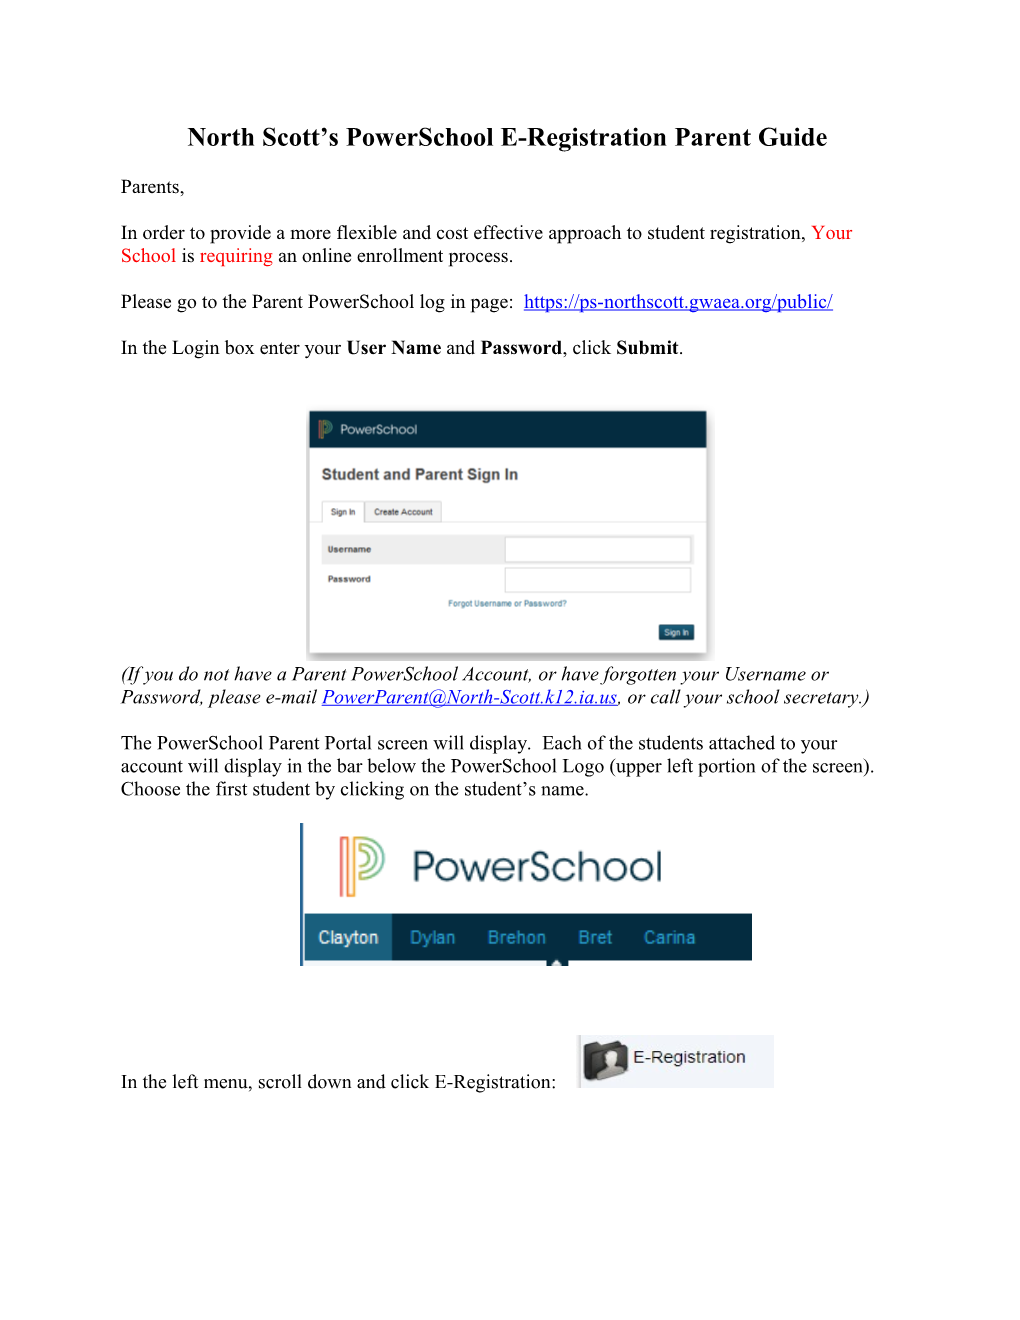 North Scott Spowerschool E-Registration Parent Guide